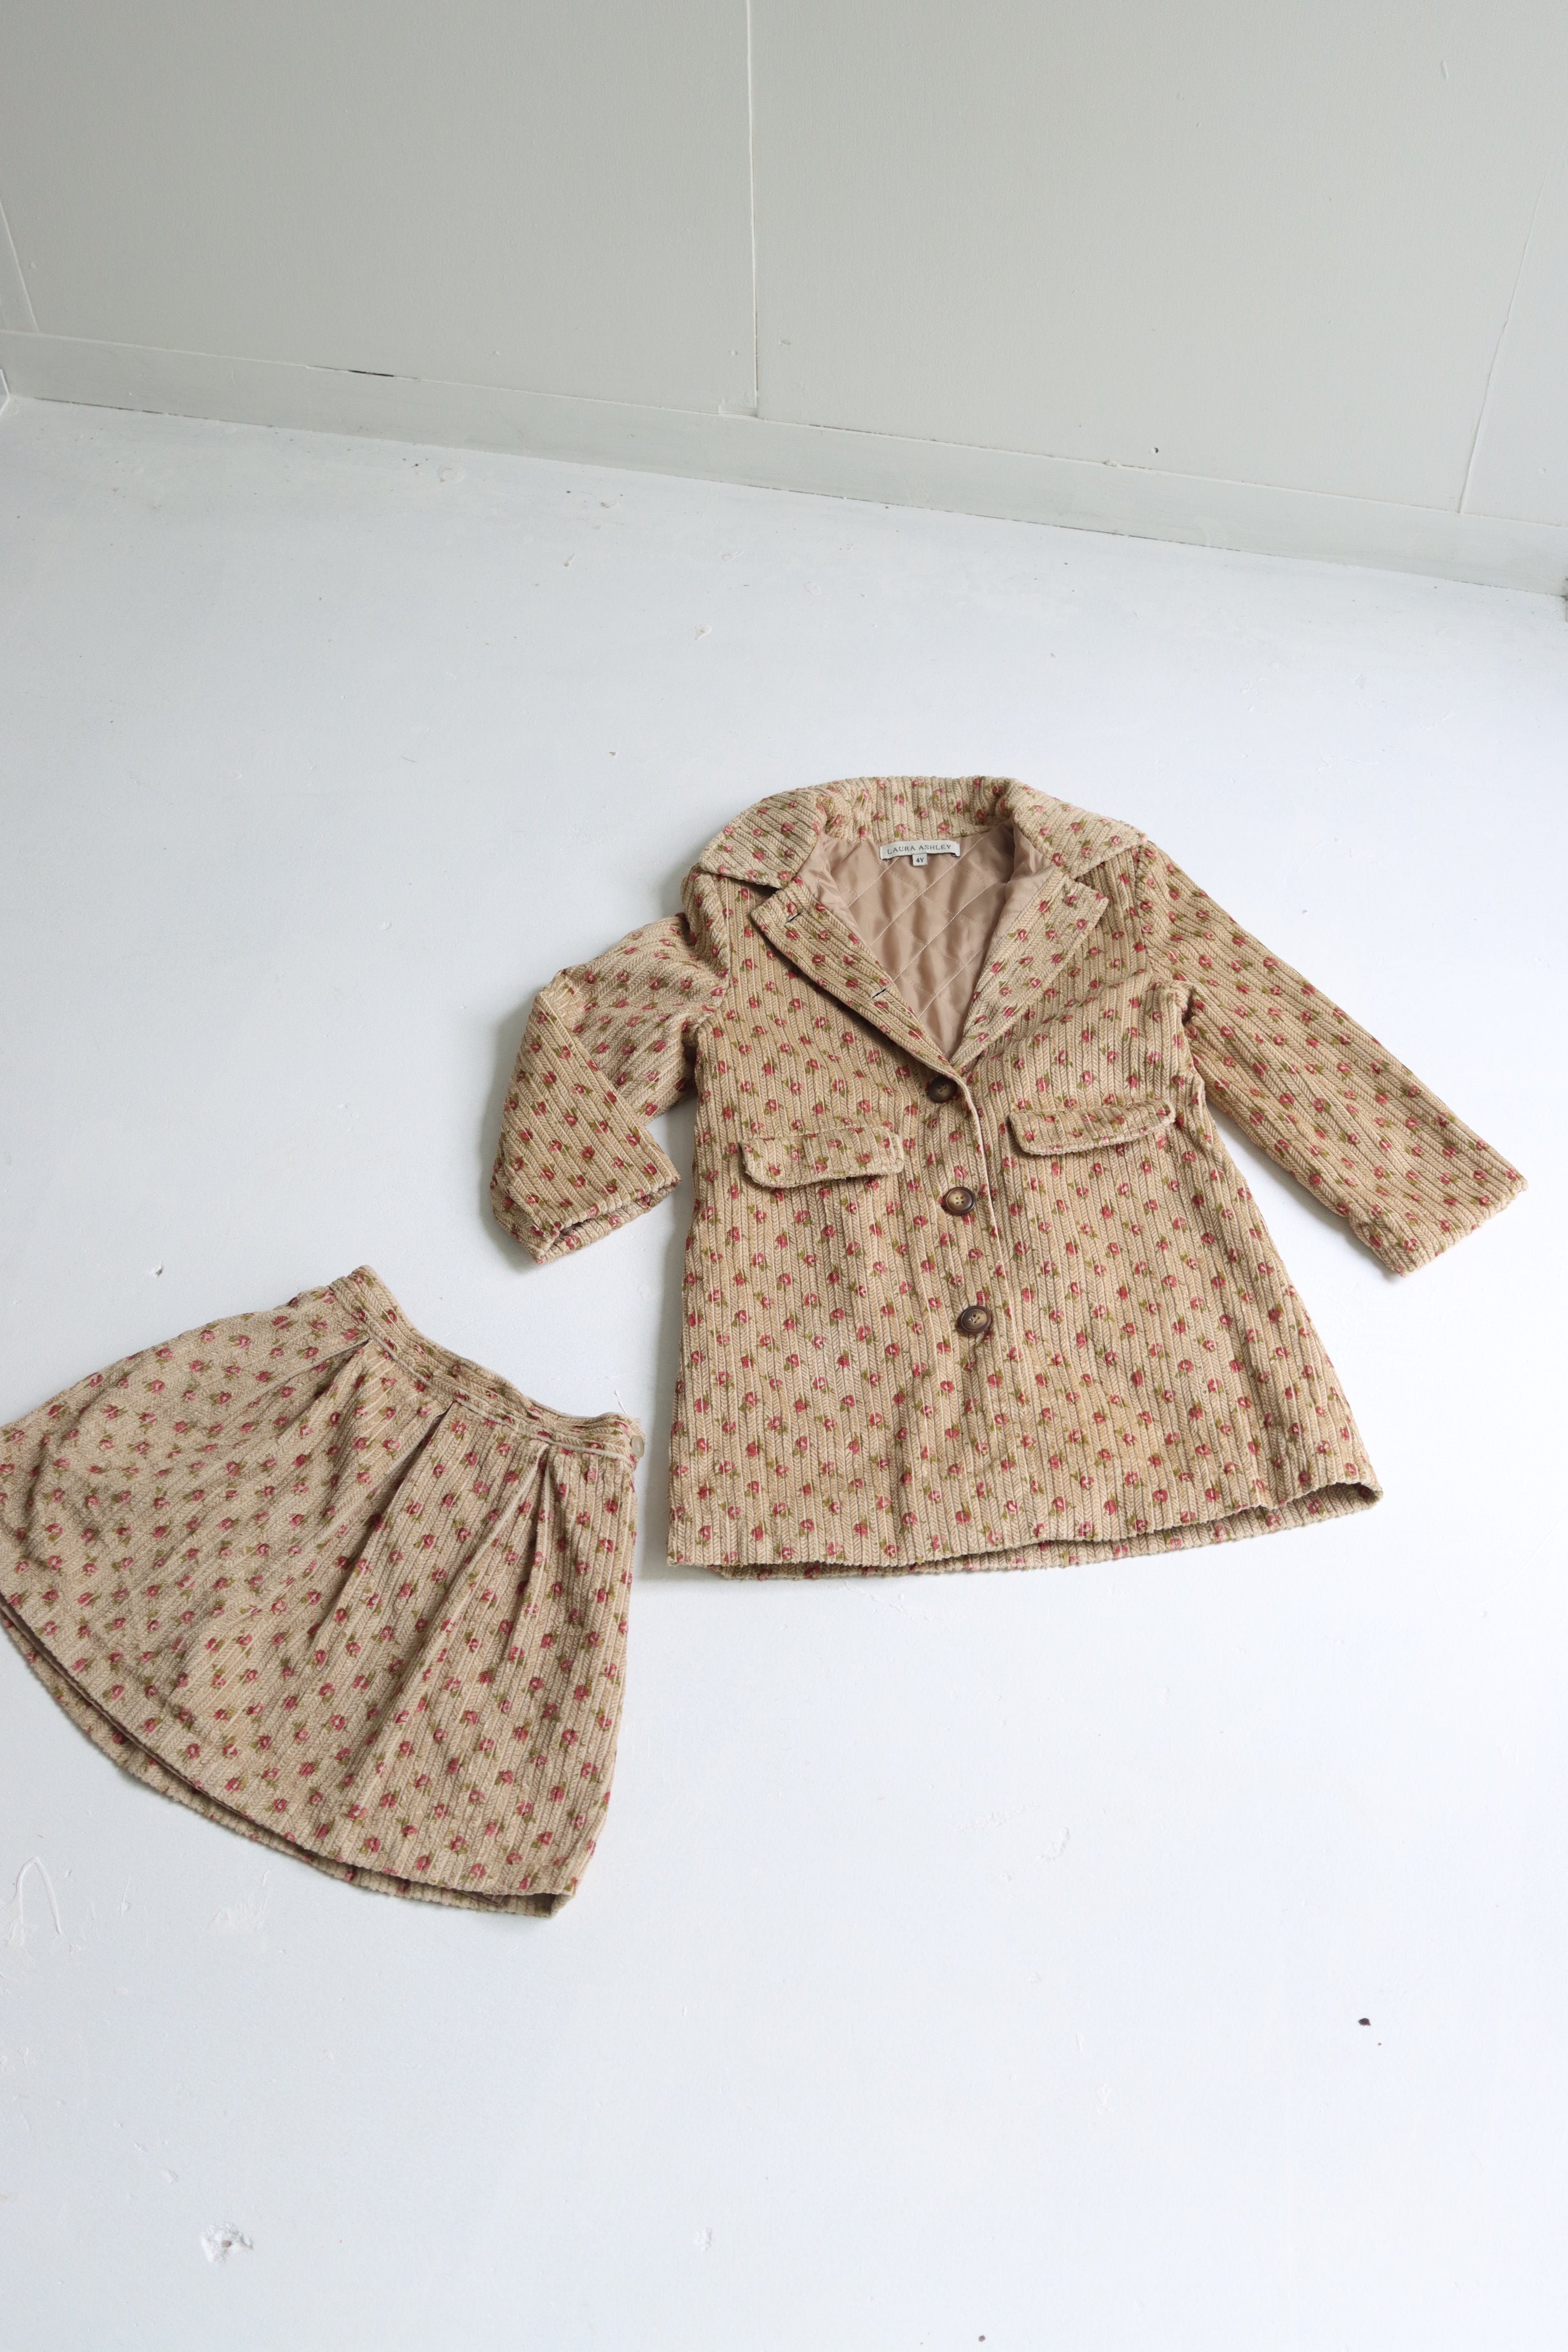 Vintage Laura Ashley outerwear ensemble- Size 4 years